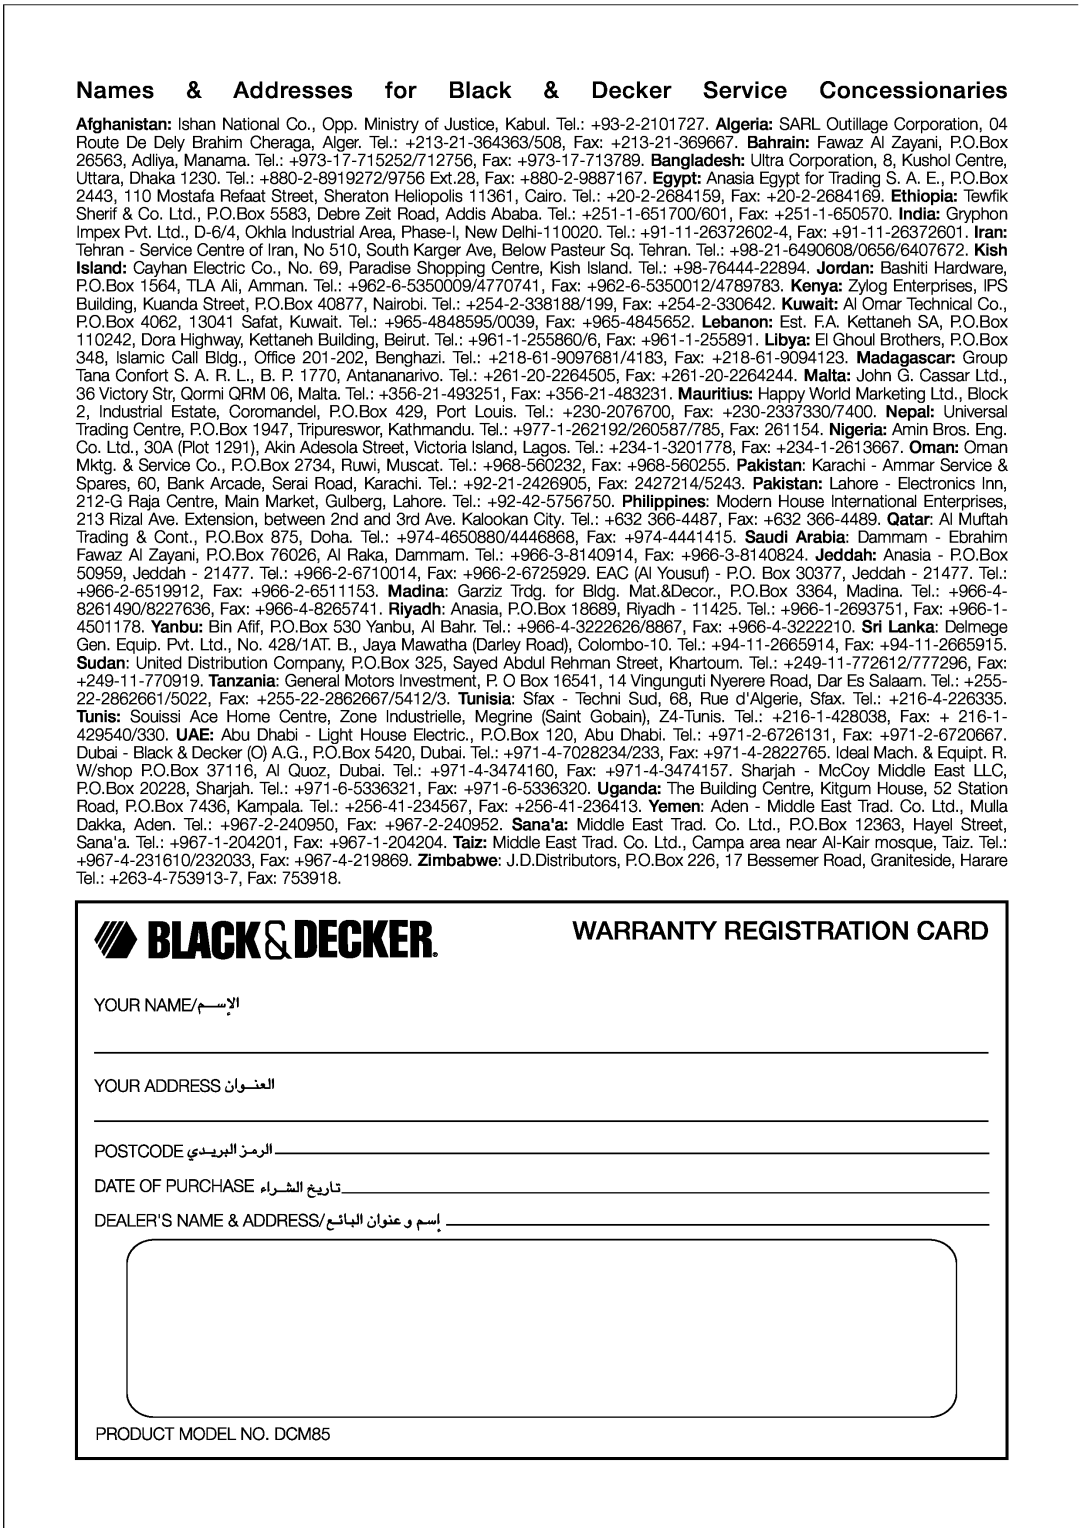 Black & Decker DCM85 manual Warranty Registration Card 